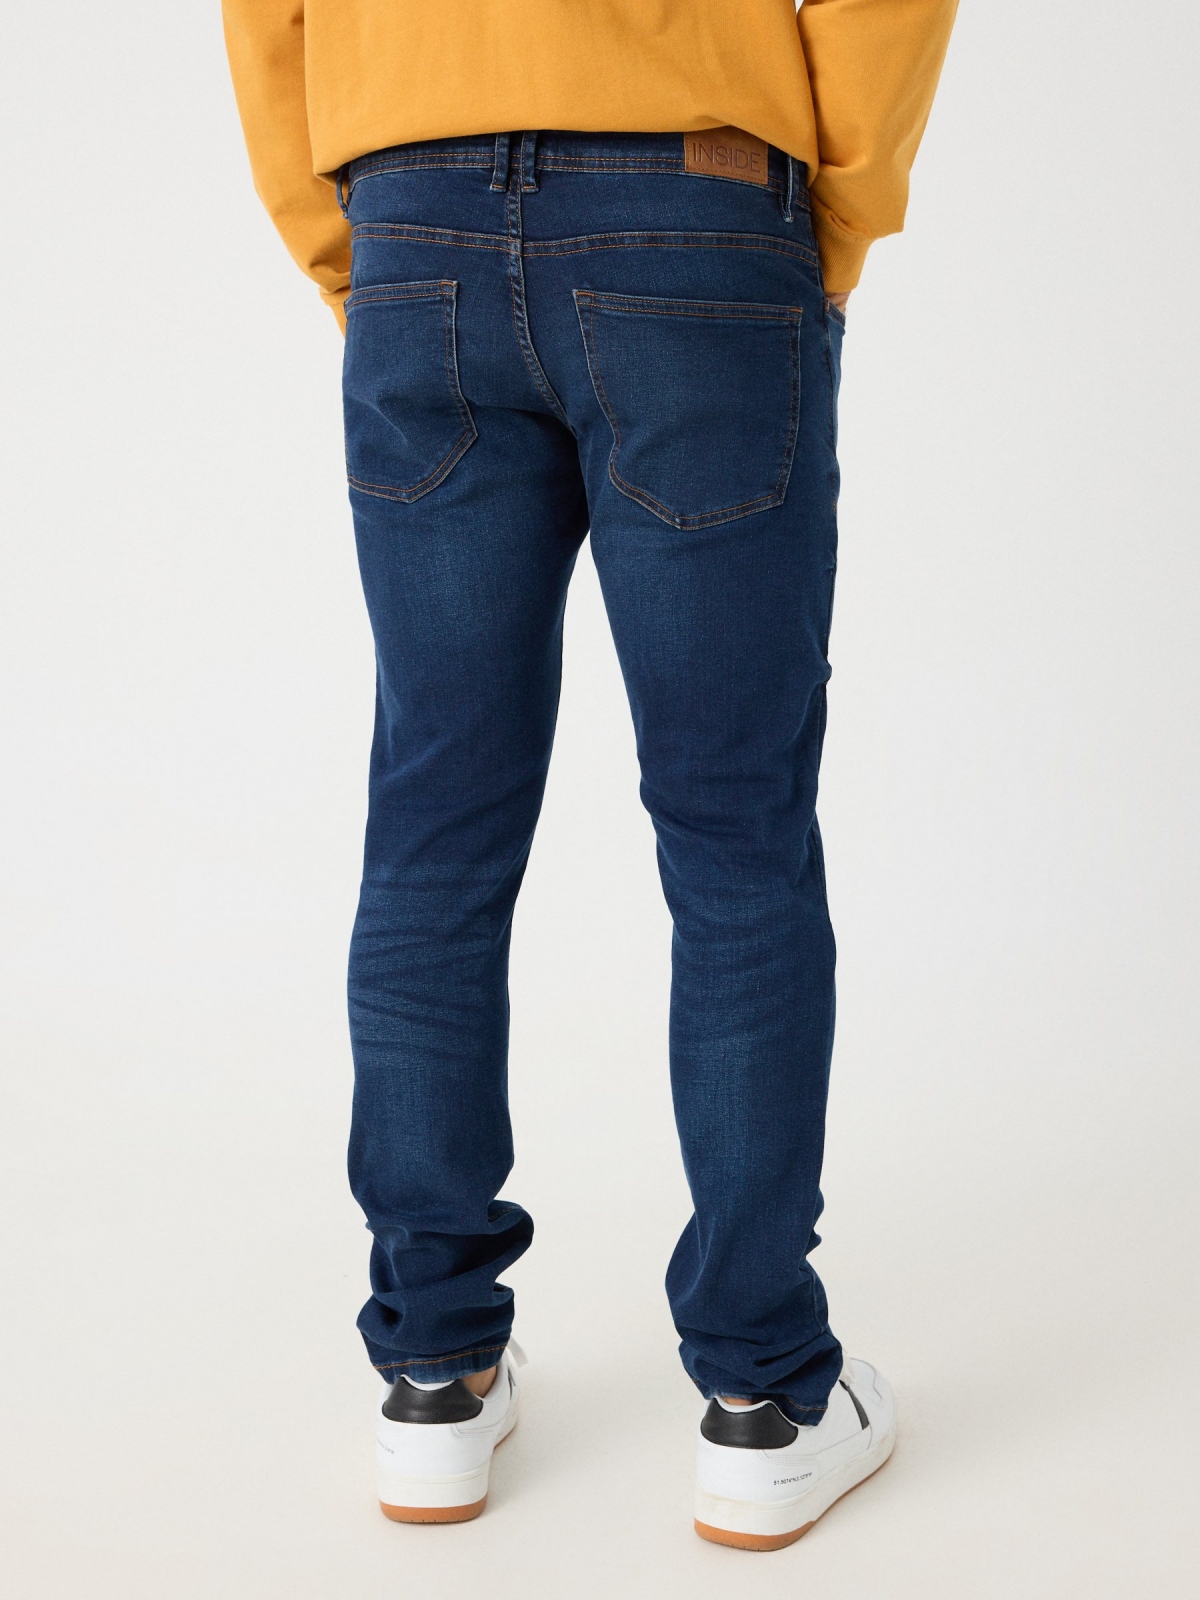 Jeans slim denim oscuro azul vista media trasera